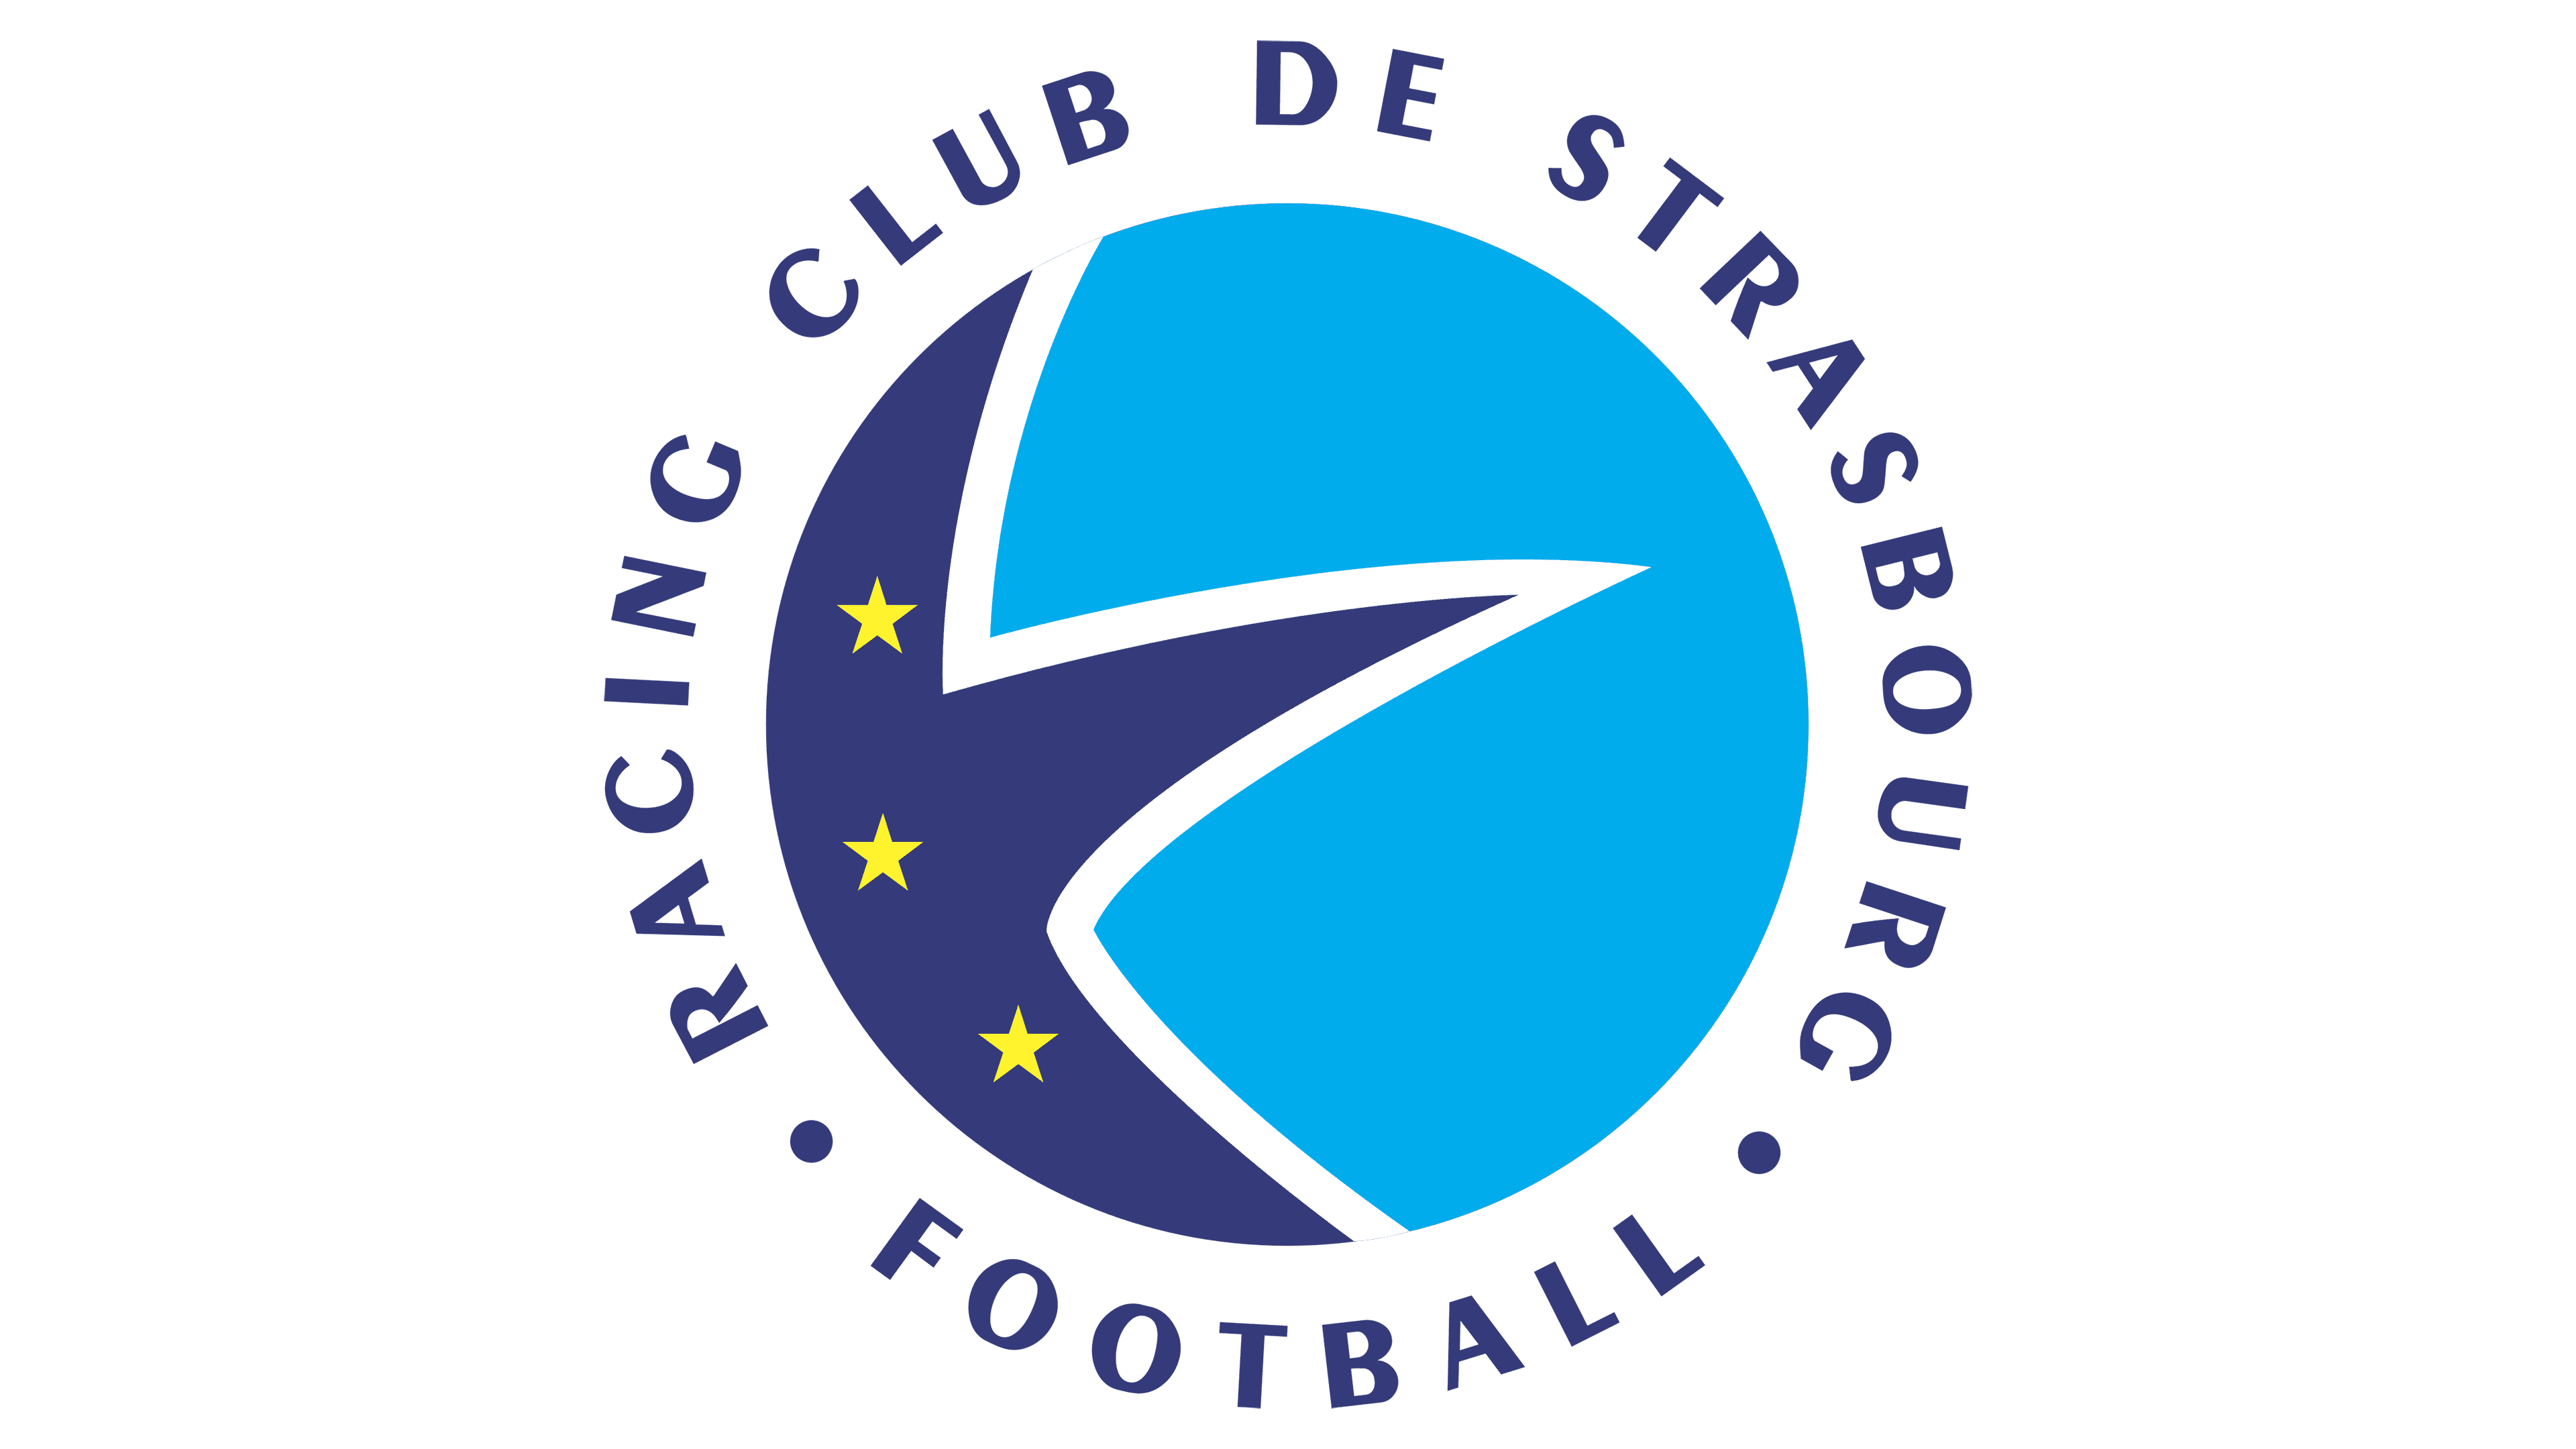 Strasbourg racing club de Strasbourg ALSACE | Greeting Card